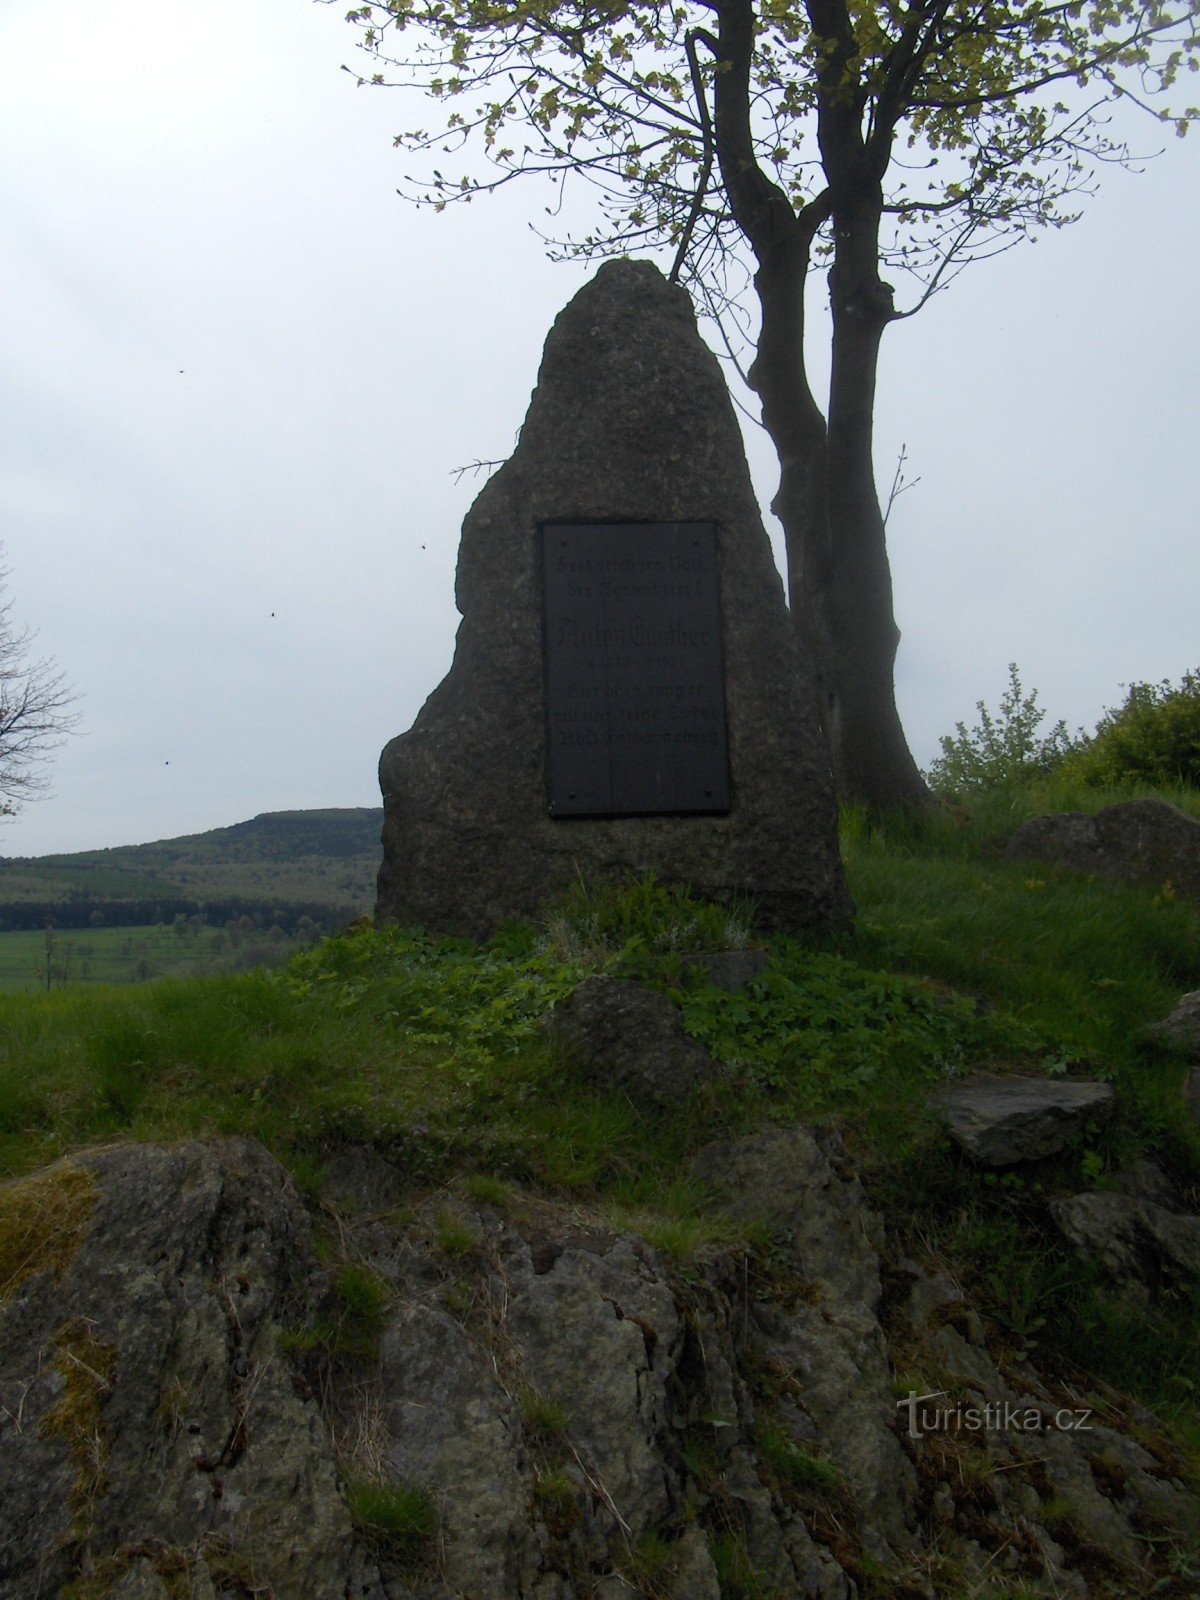 Monument to Anton Günter on Růžové vrch